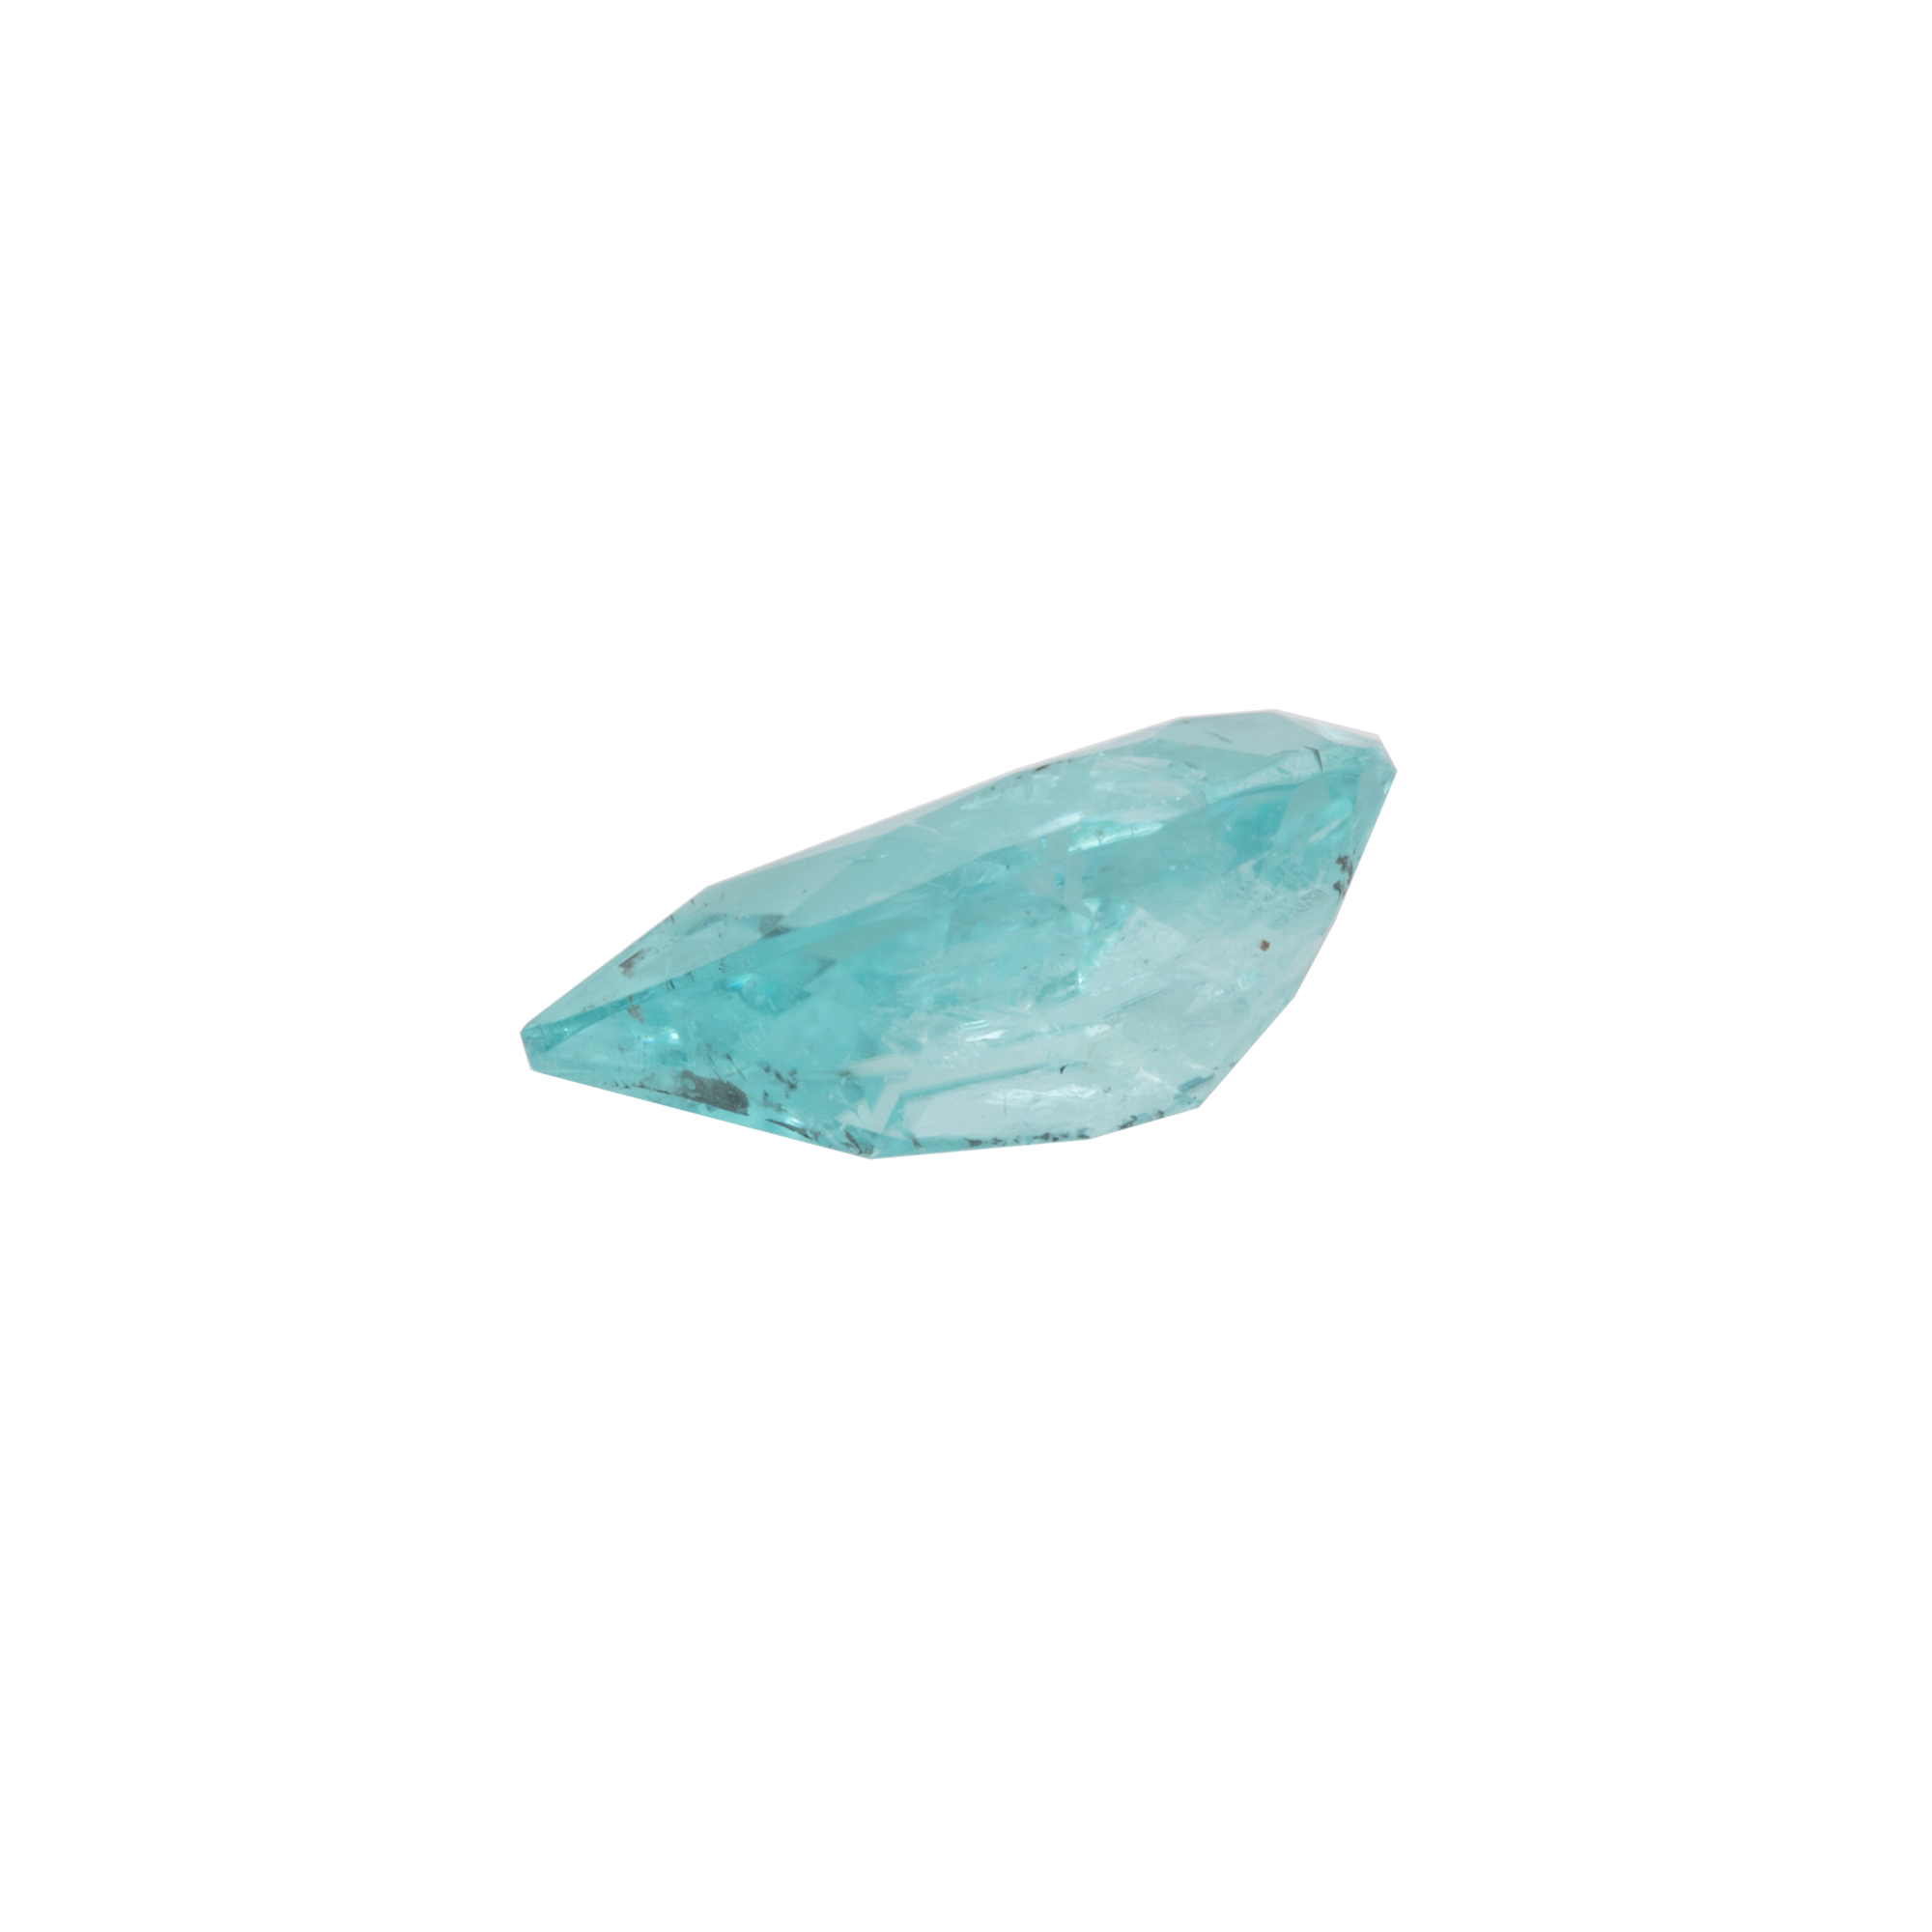 Paraiba Tourmaline - blue/green, pearshape, 7x4 mm, 0.44 cts, No. PT18001